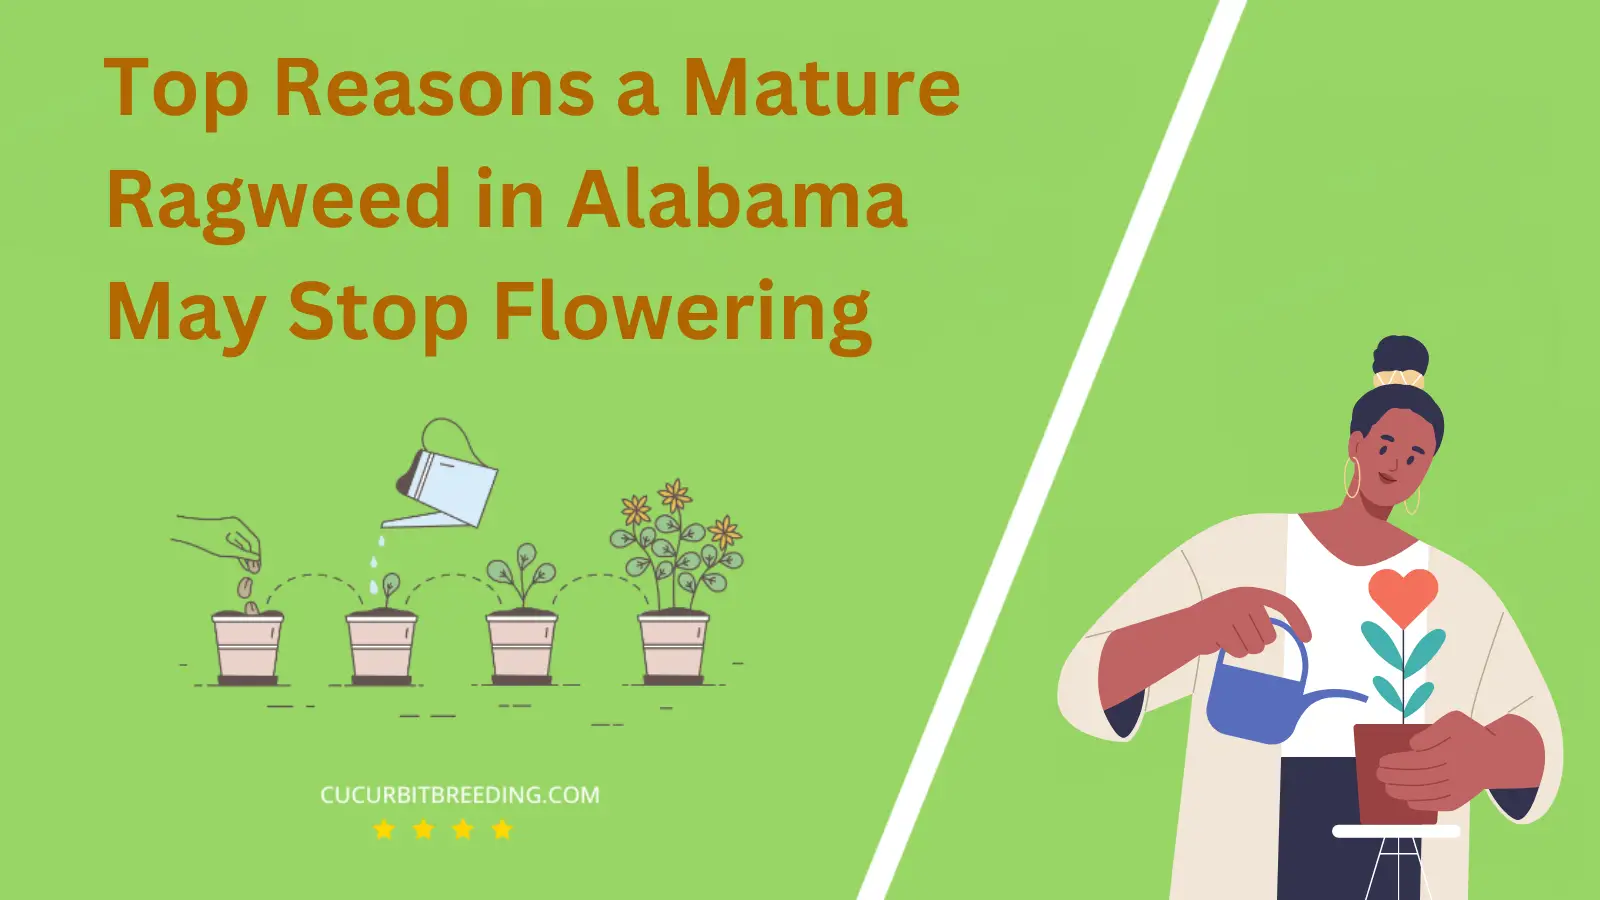 Top Reasons a Mature Ragweed in Alabama May Stop Flowering